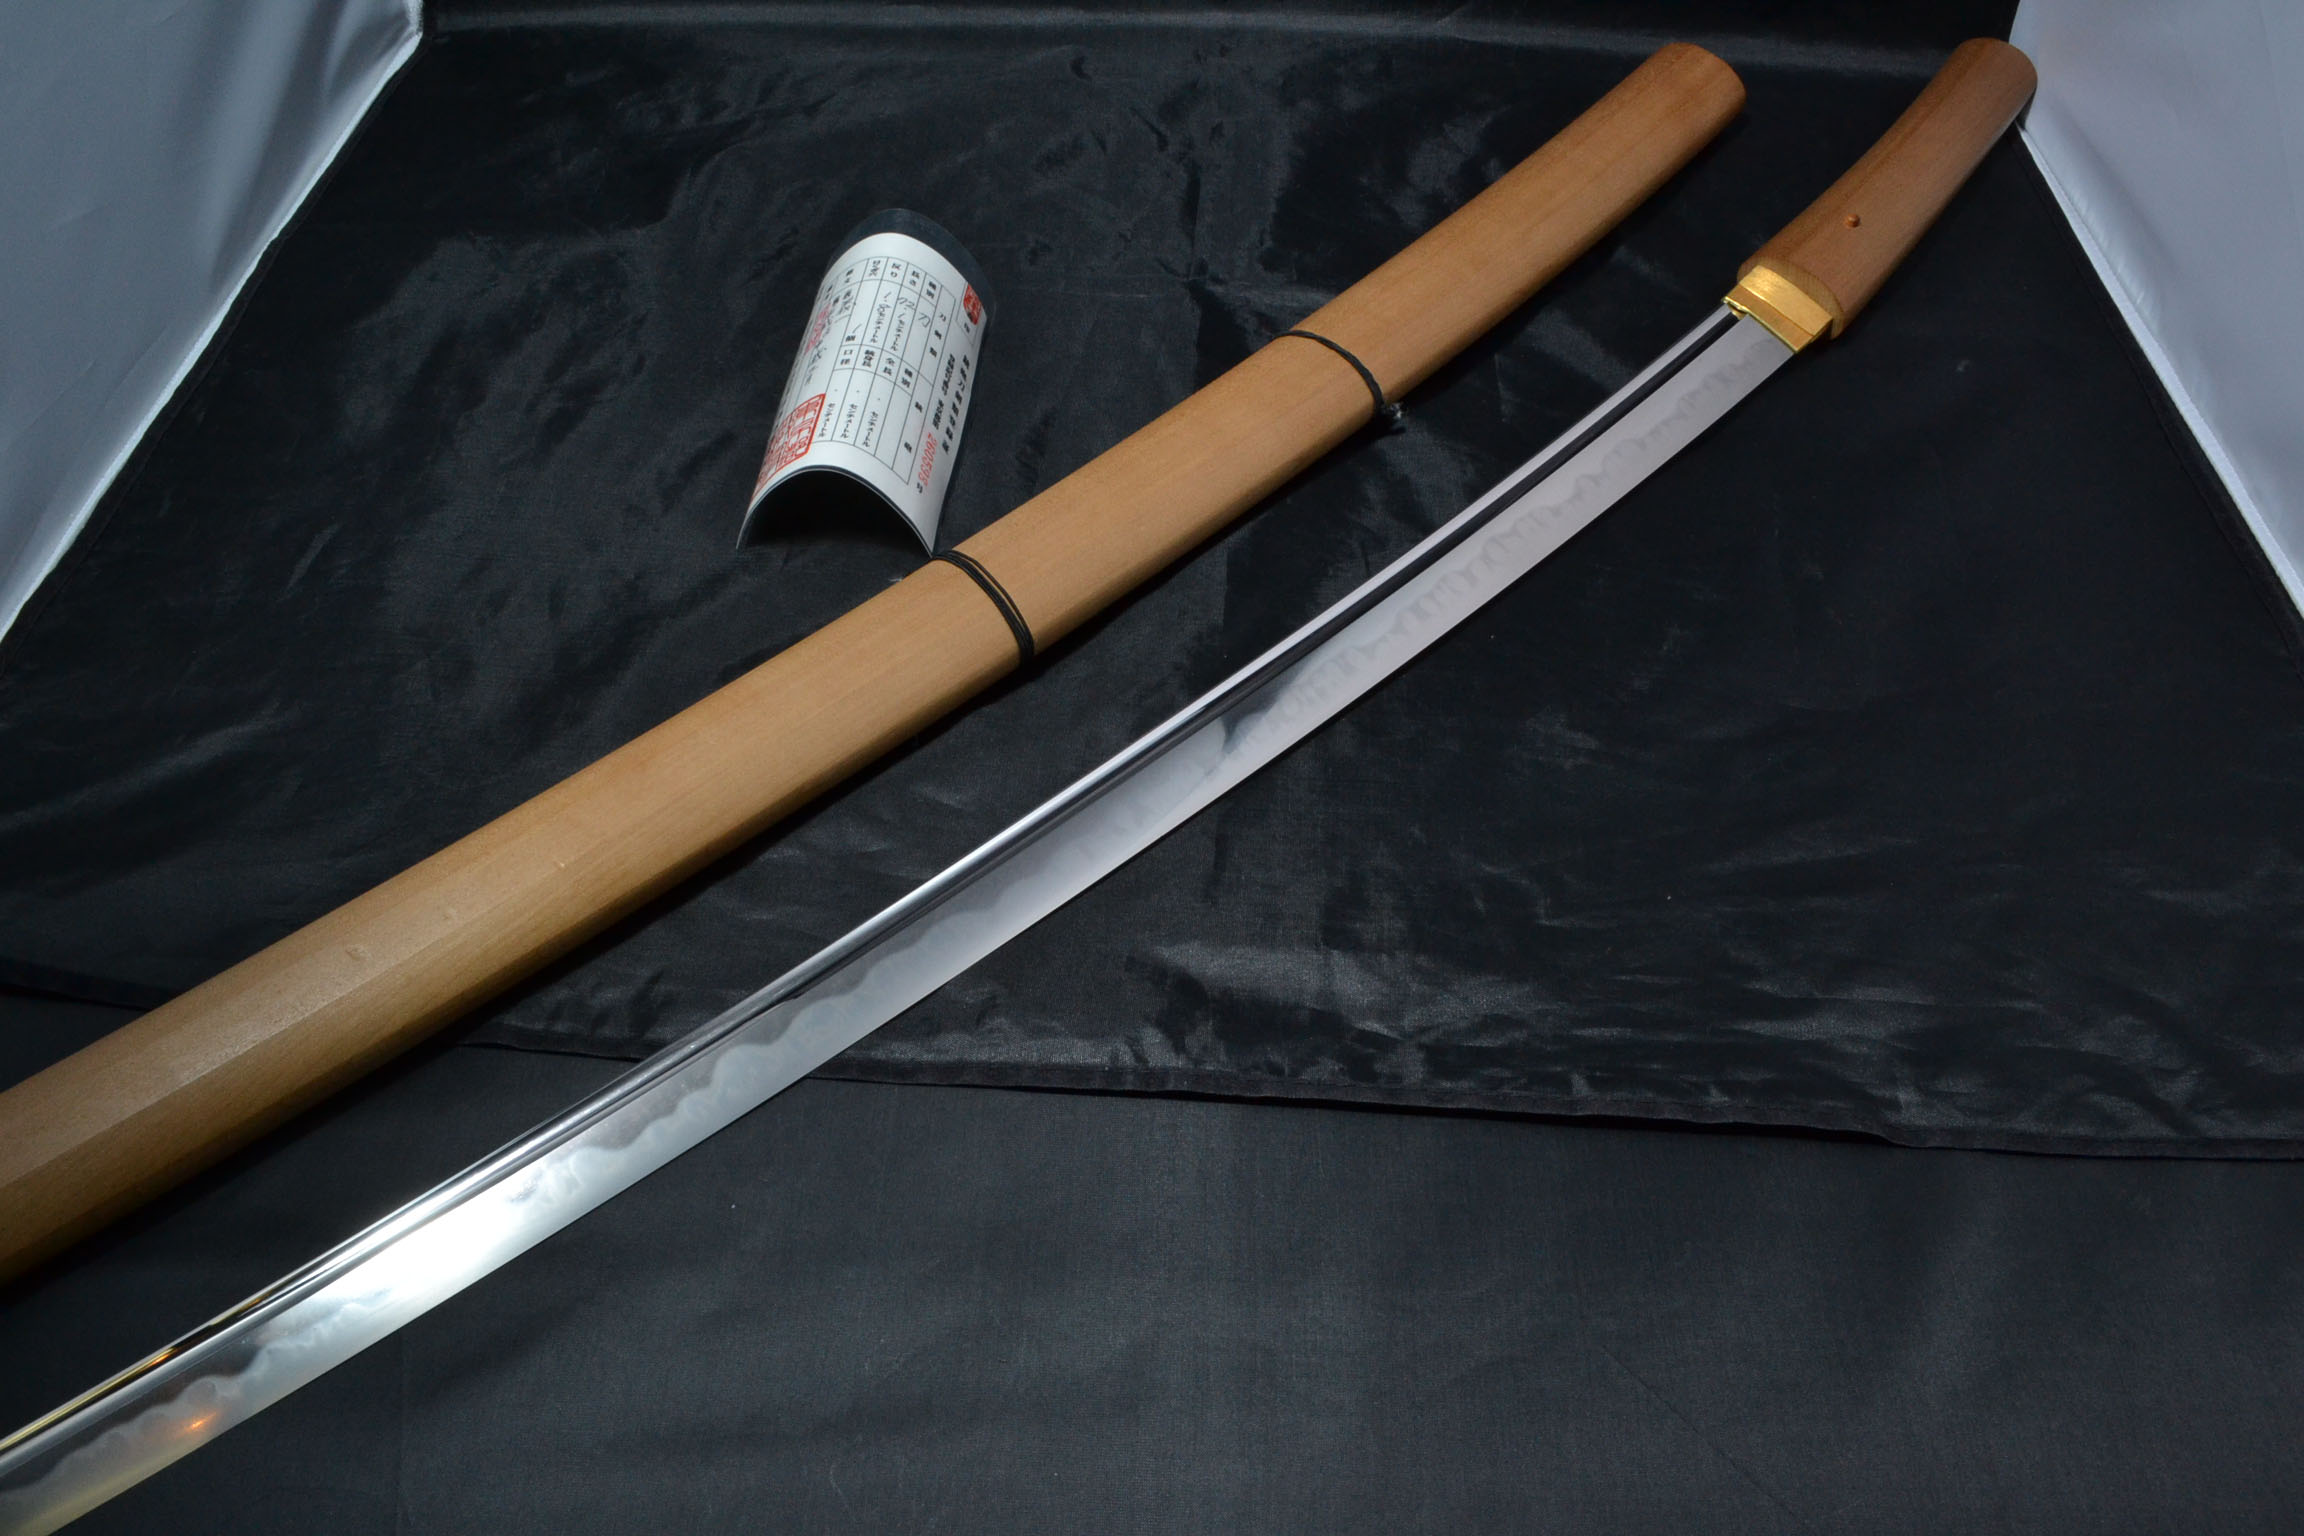 authentic katana blade made of